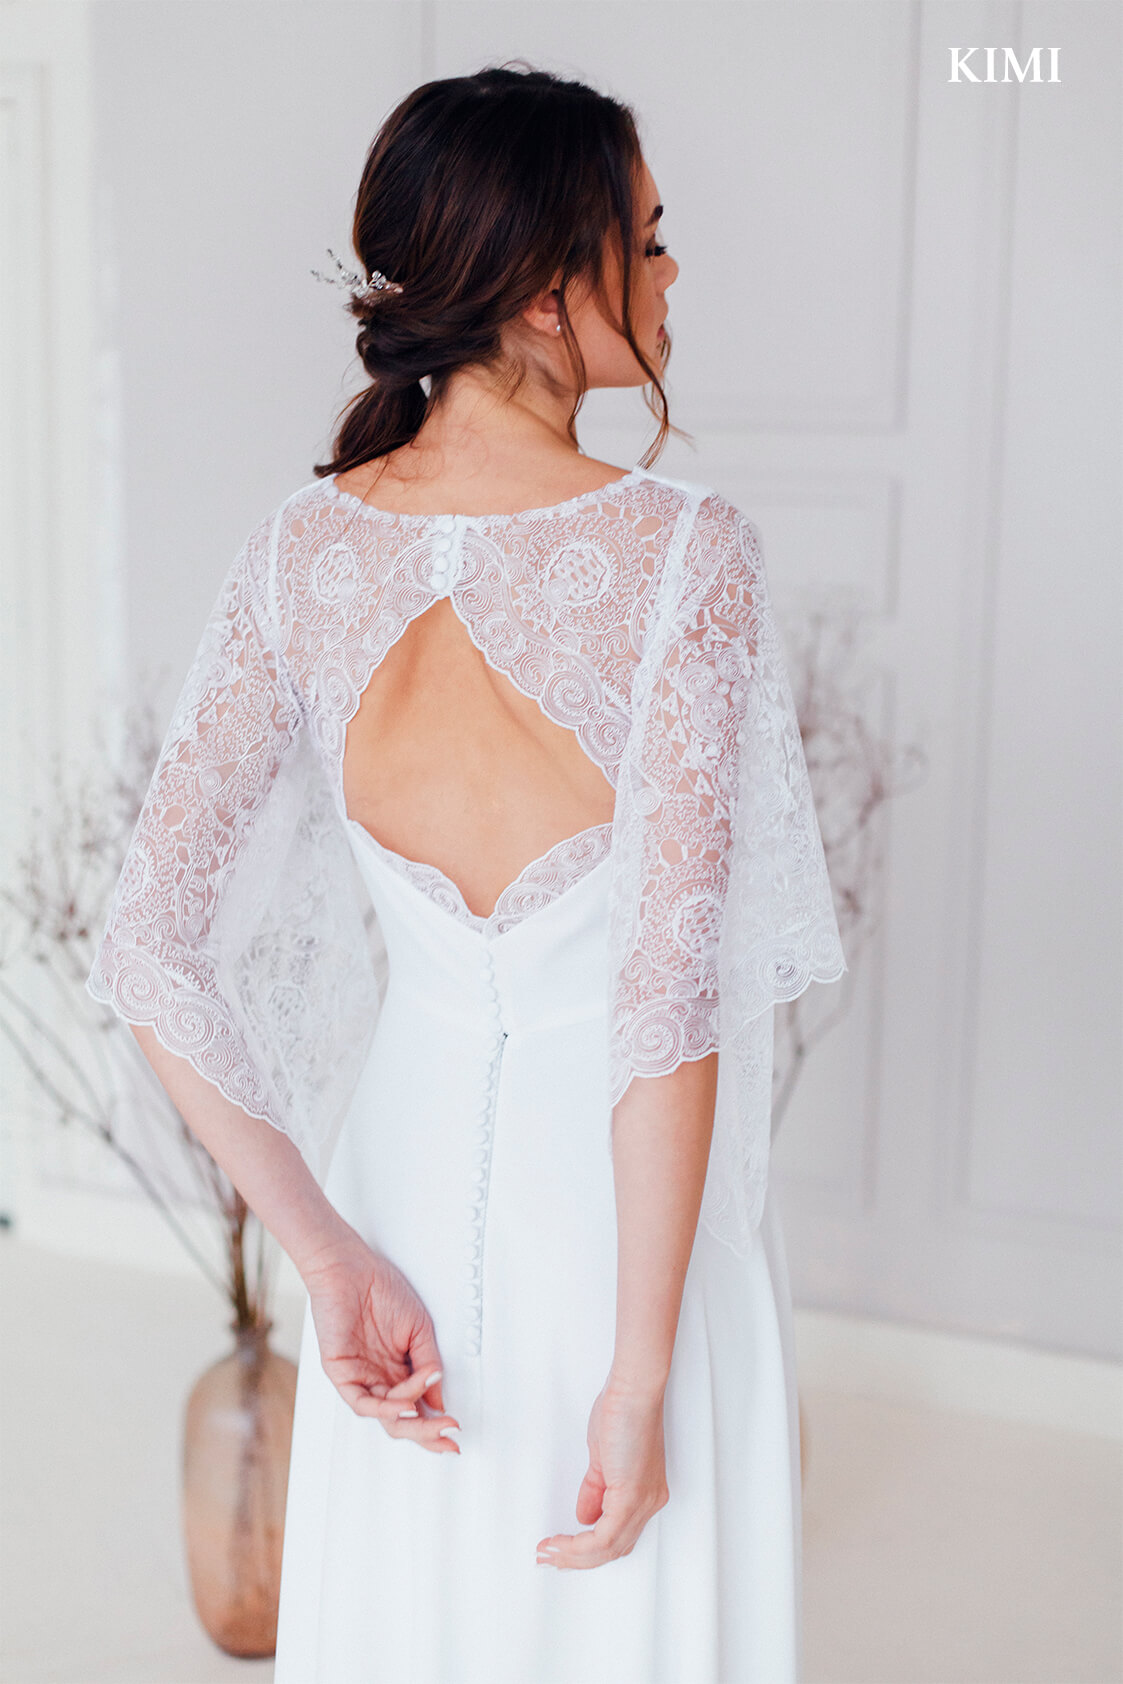 KIMI - wedding dress "Refined Elegance" collection